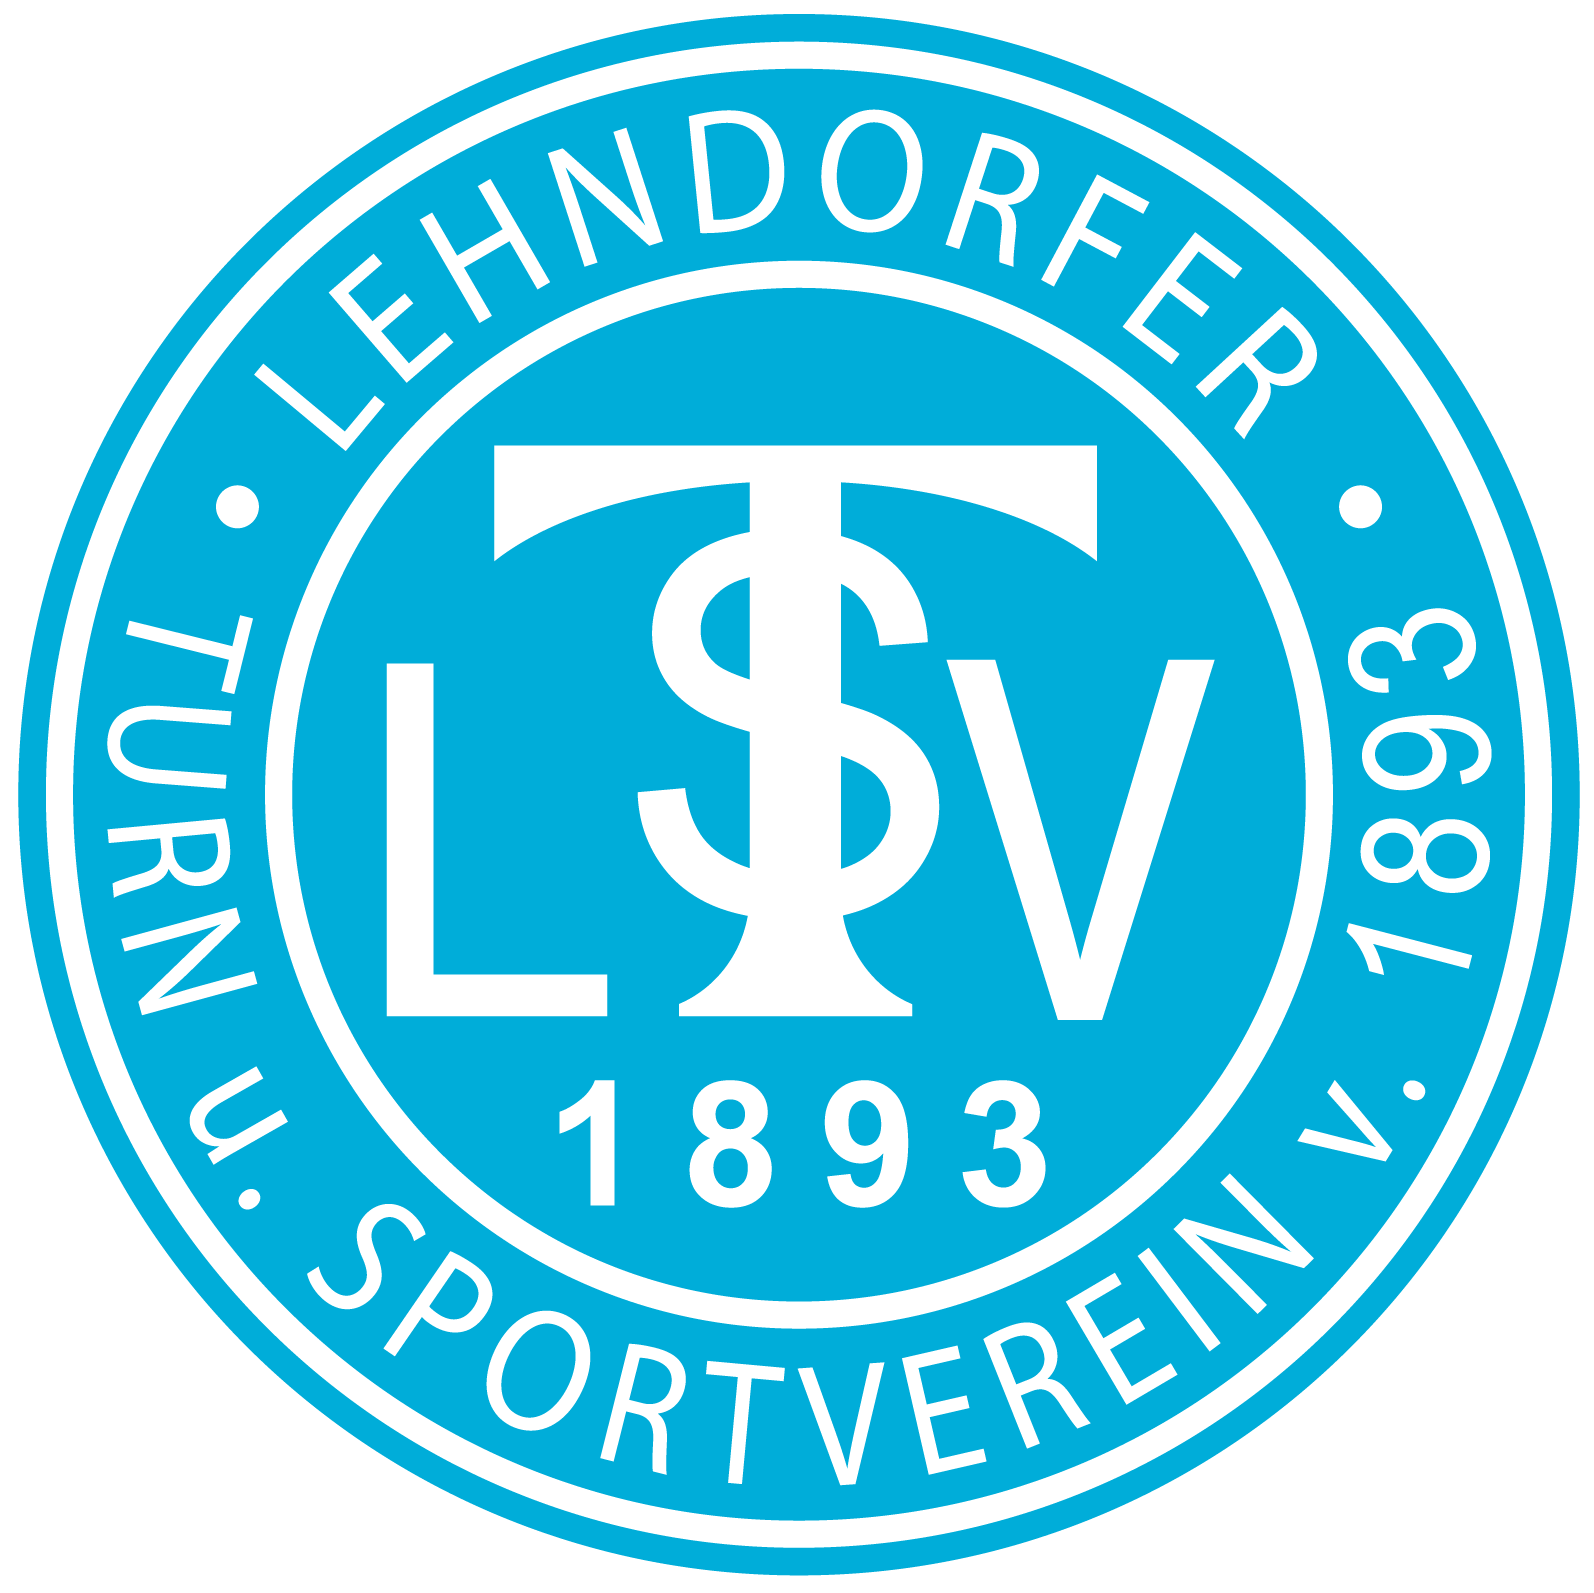  Lehndorfer Turn- u. Sportverein v. 1893 e.V.